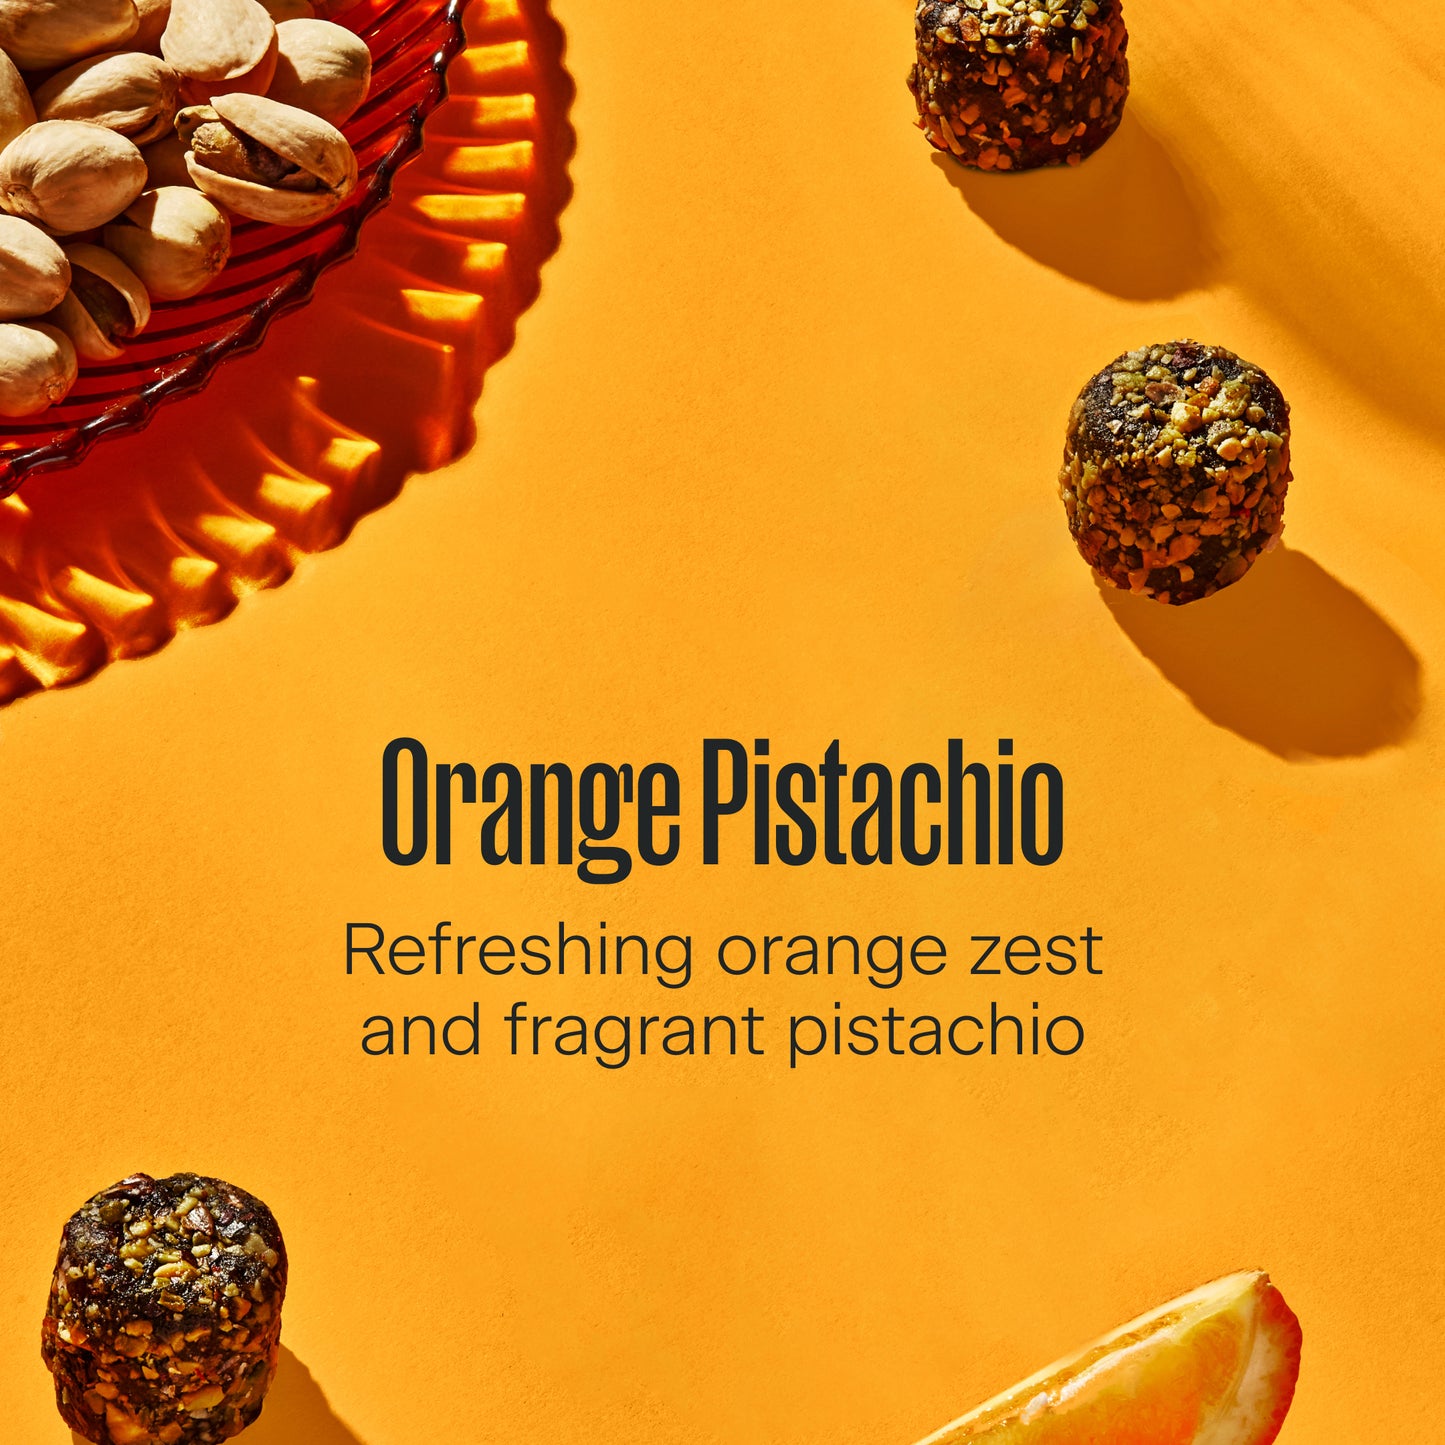 The Daily Bite: Orange Pistachio